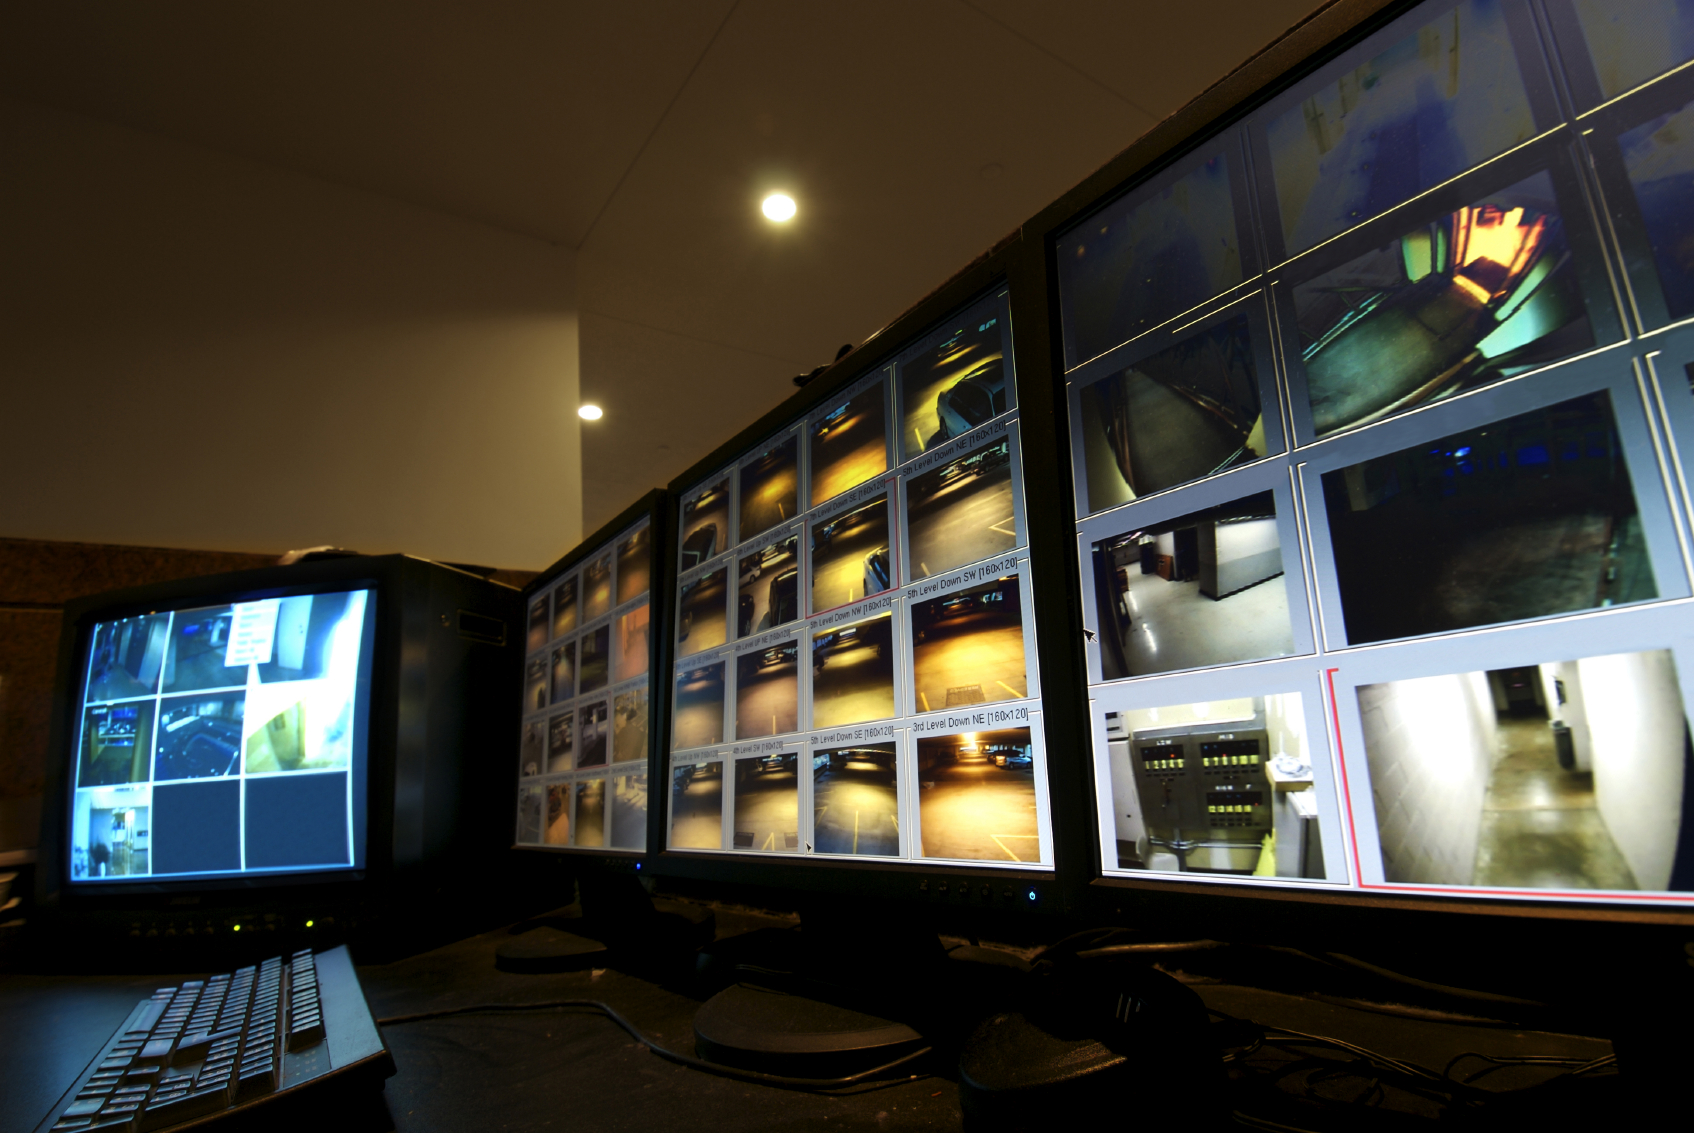 The lucrative future of CCTV: remote biometrics and behavioral suspect detection